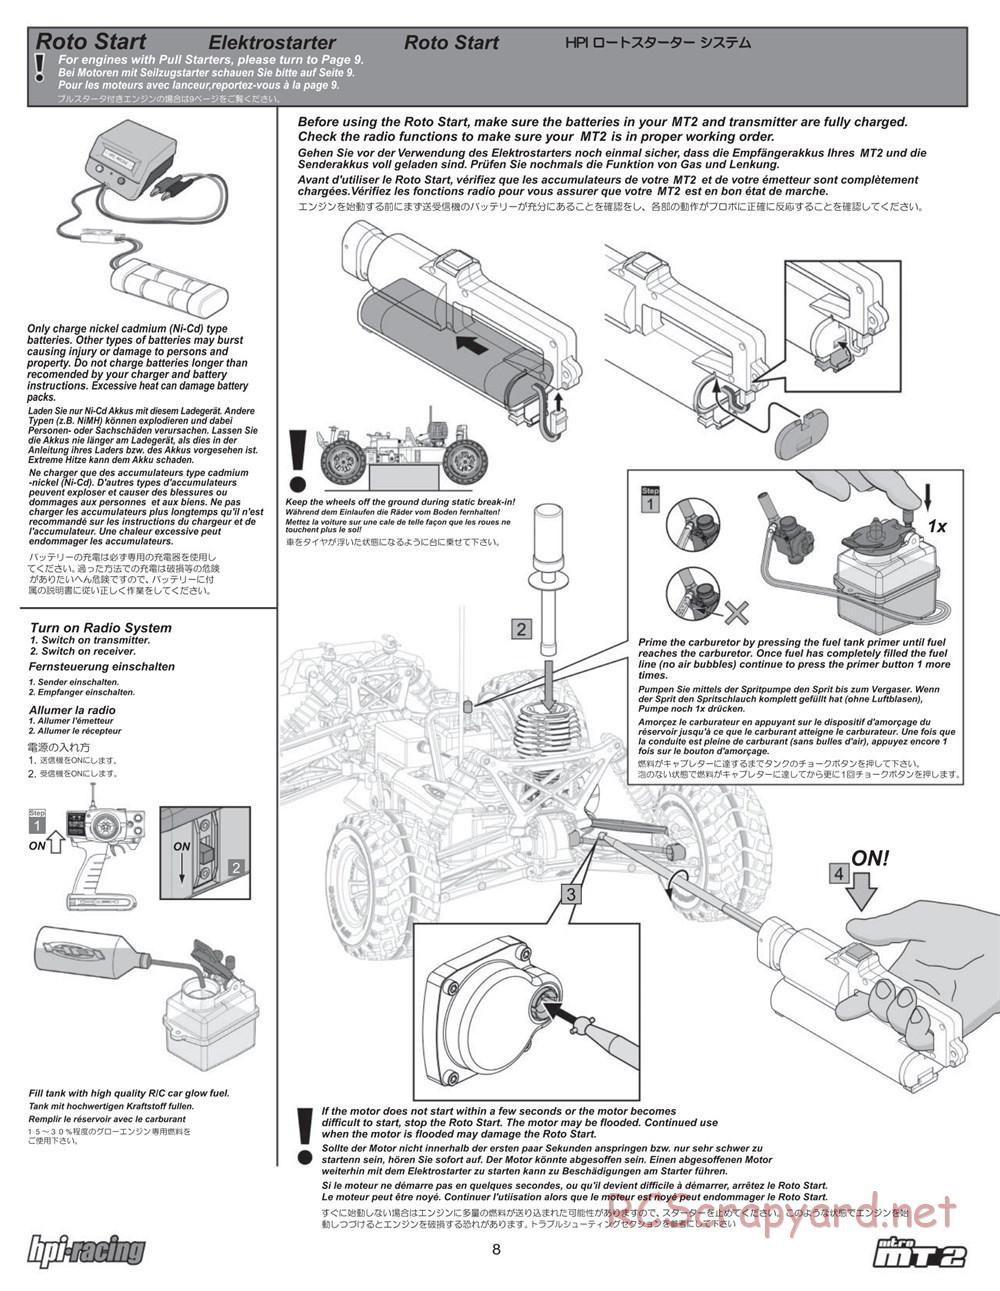 HPI - Nitro MT2 - Manual - Page 8